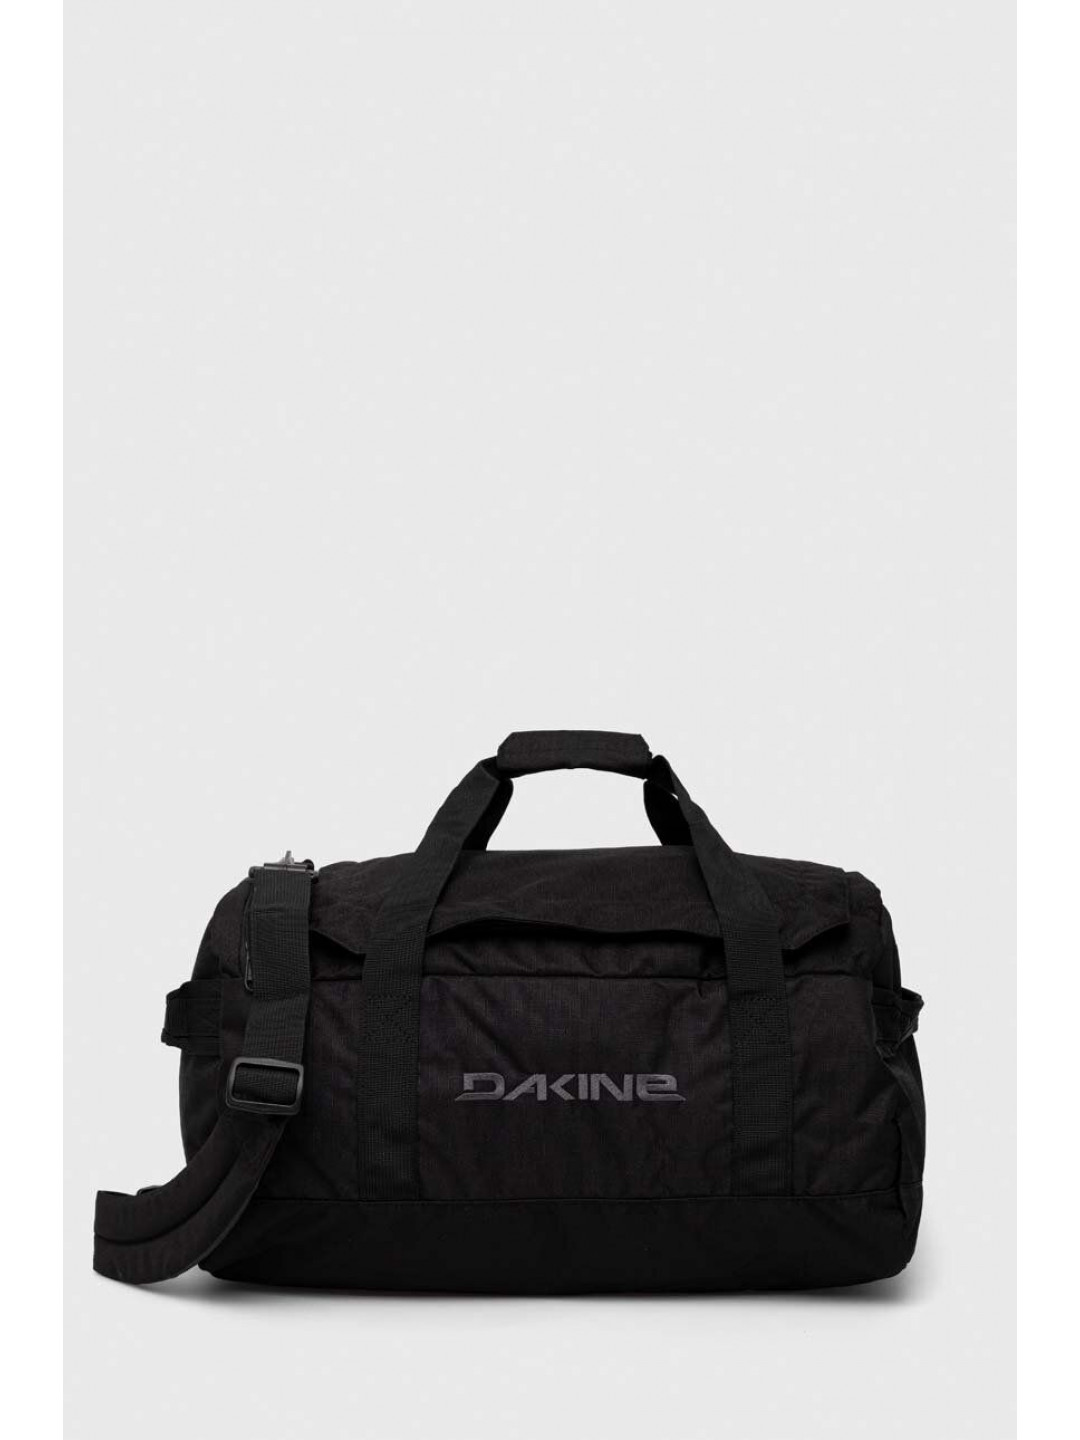 Sportovní taška Dakine EQ Duffle 35 černá barva